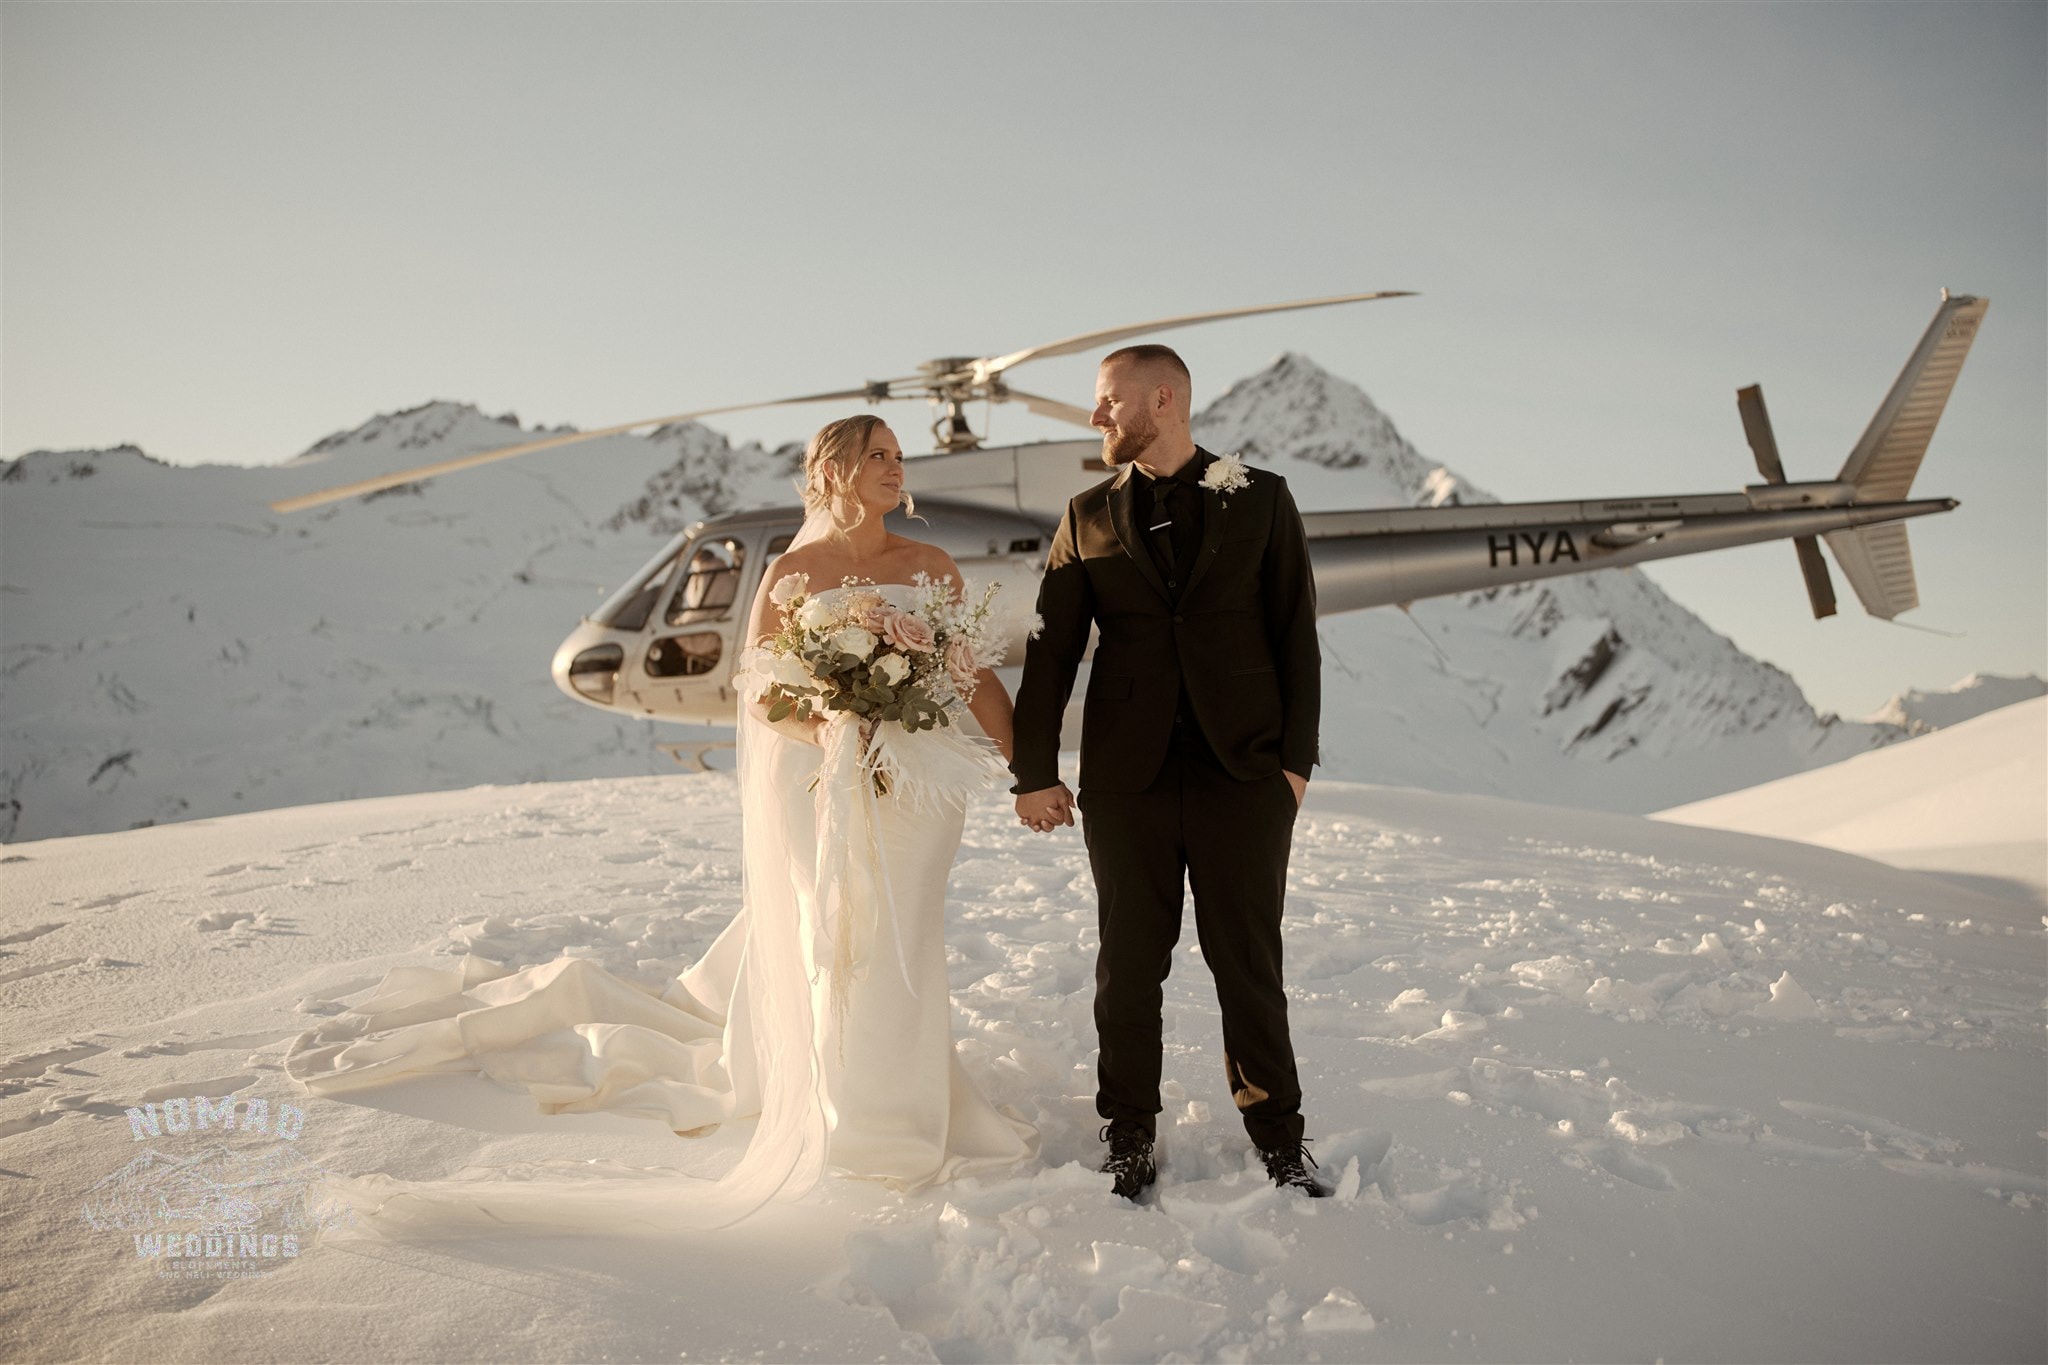 Jay and Dave | Coromandel Peak Heli Elopement Wedding